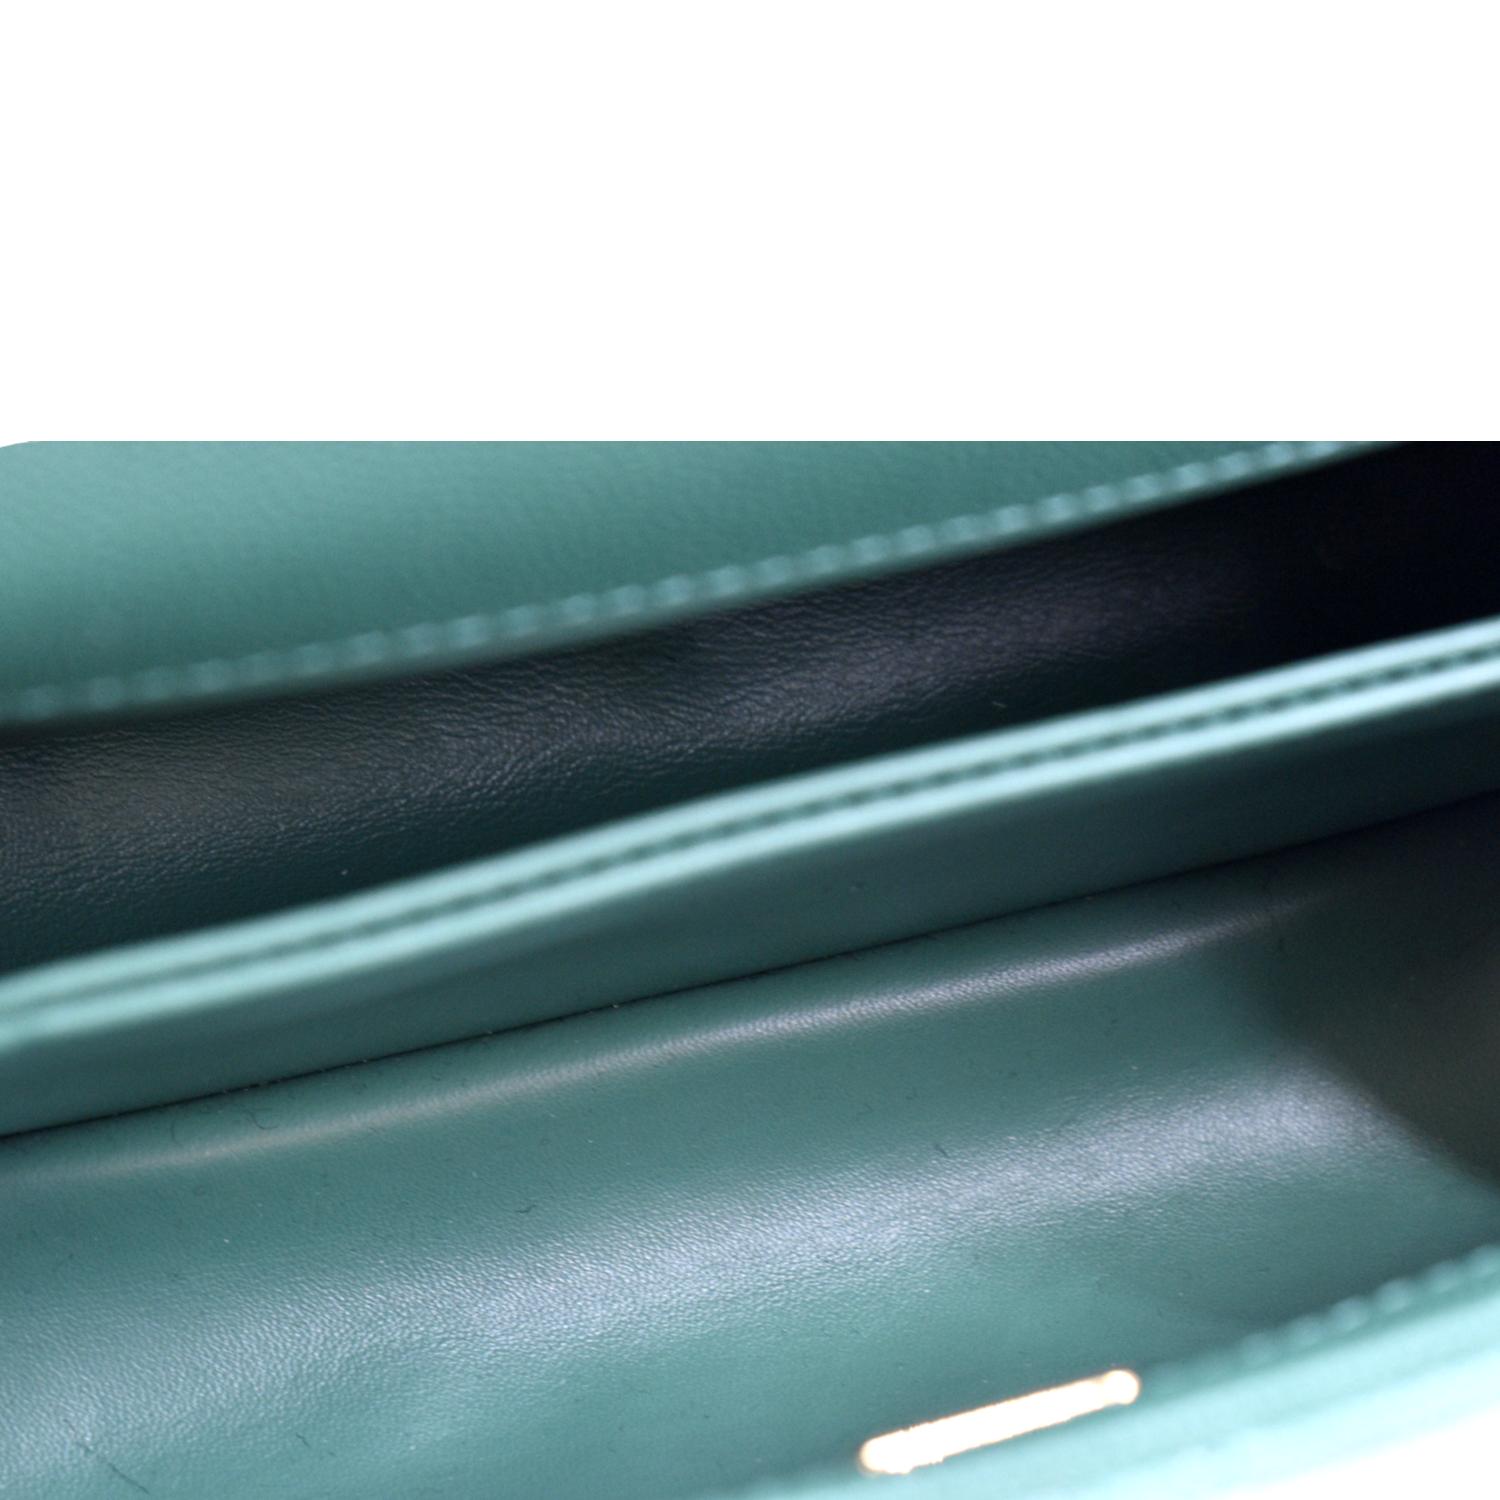 CHANEL Coco Mini Top Handle Caviar Leather Shoulder Bag Green